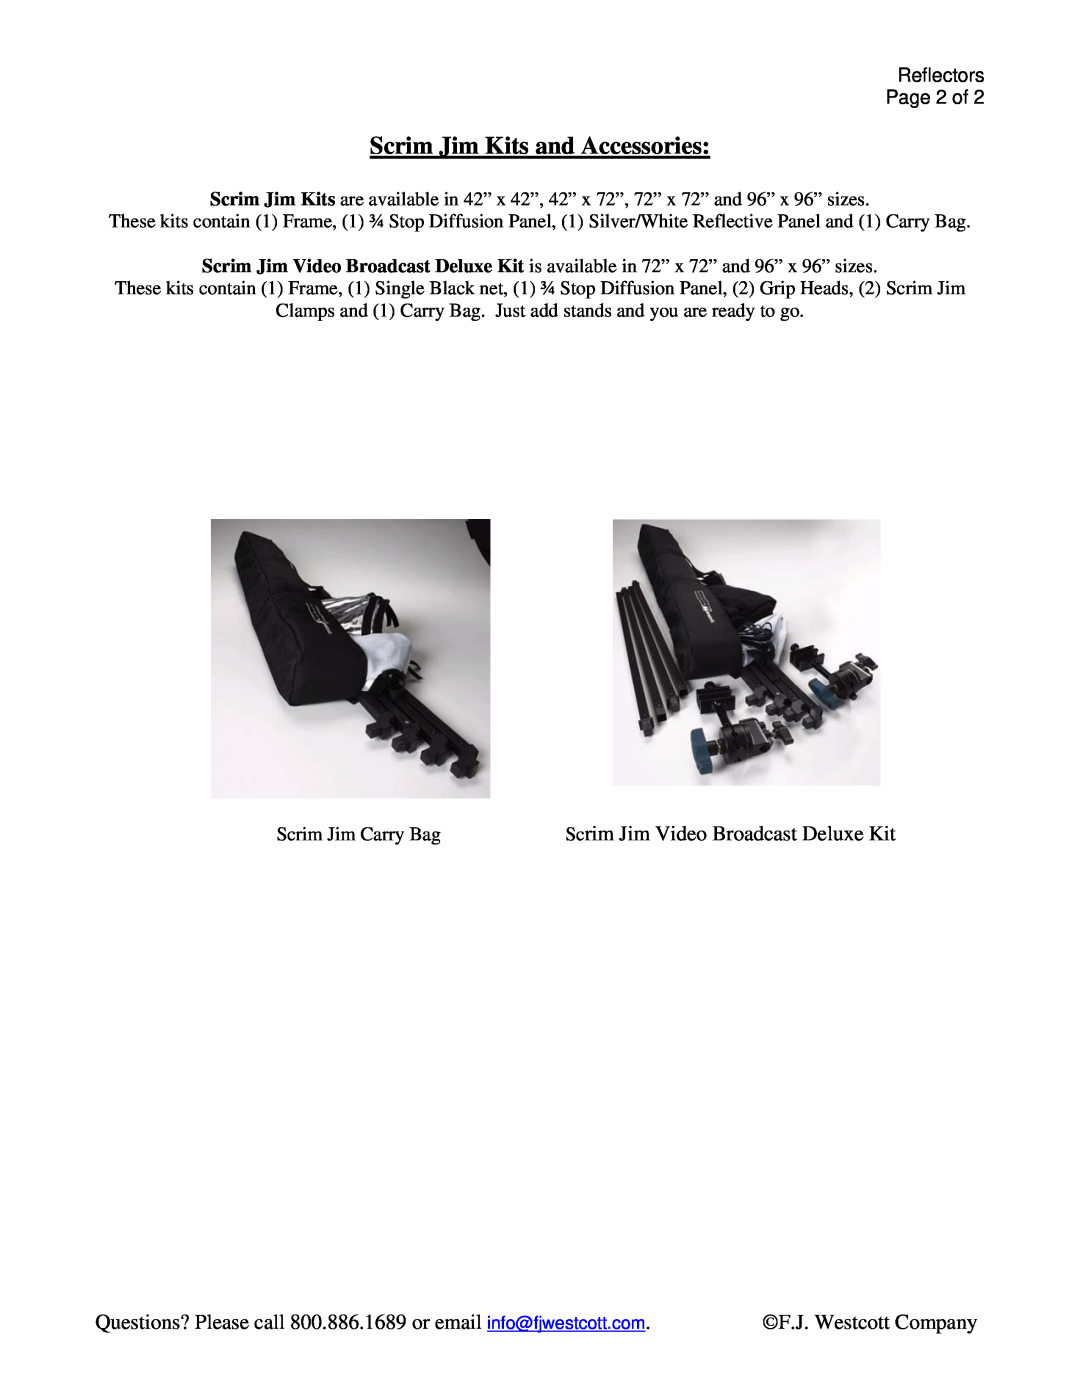 Westcott 1819 manual Scrim Jim Kits and Accessories, Reflectors 